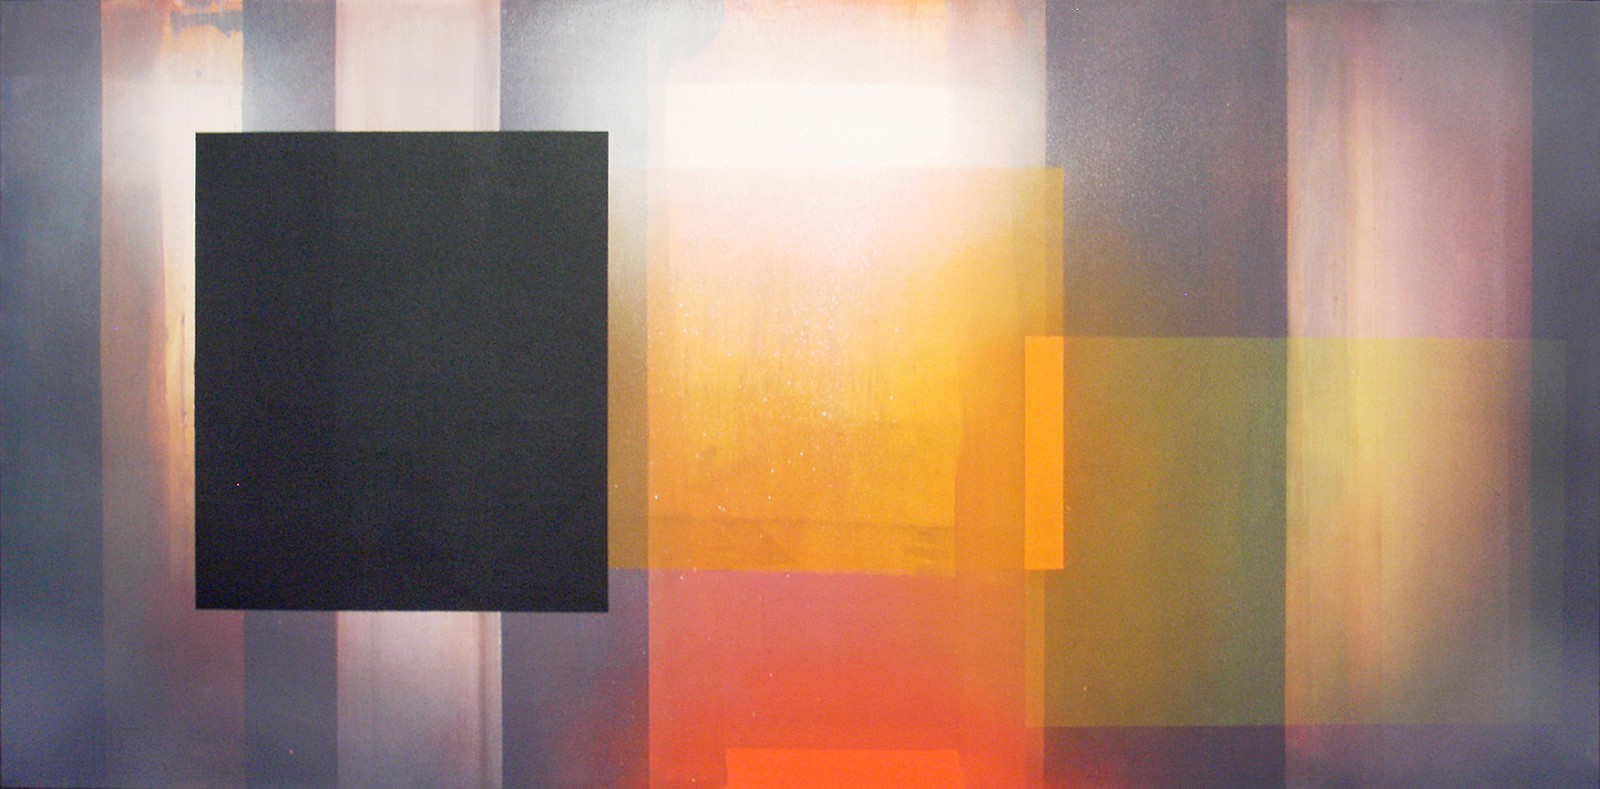 Richard Saba, Proscenium, 2003
Acrylic on canvas, 45 x 91 1/2 inches
SABA0036